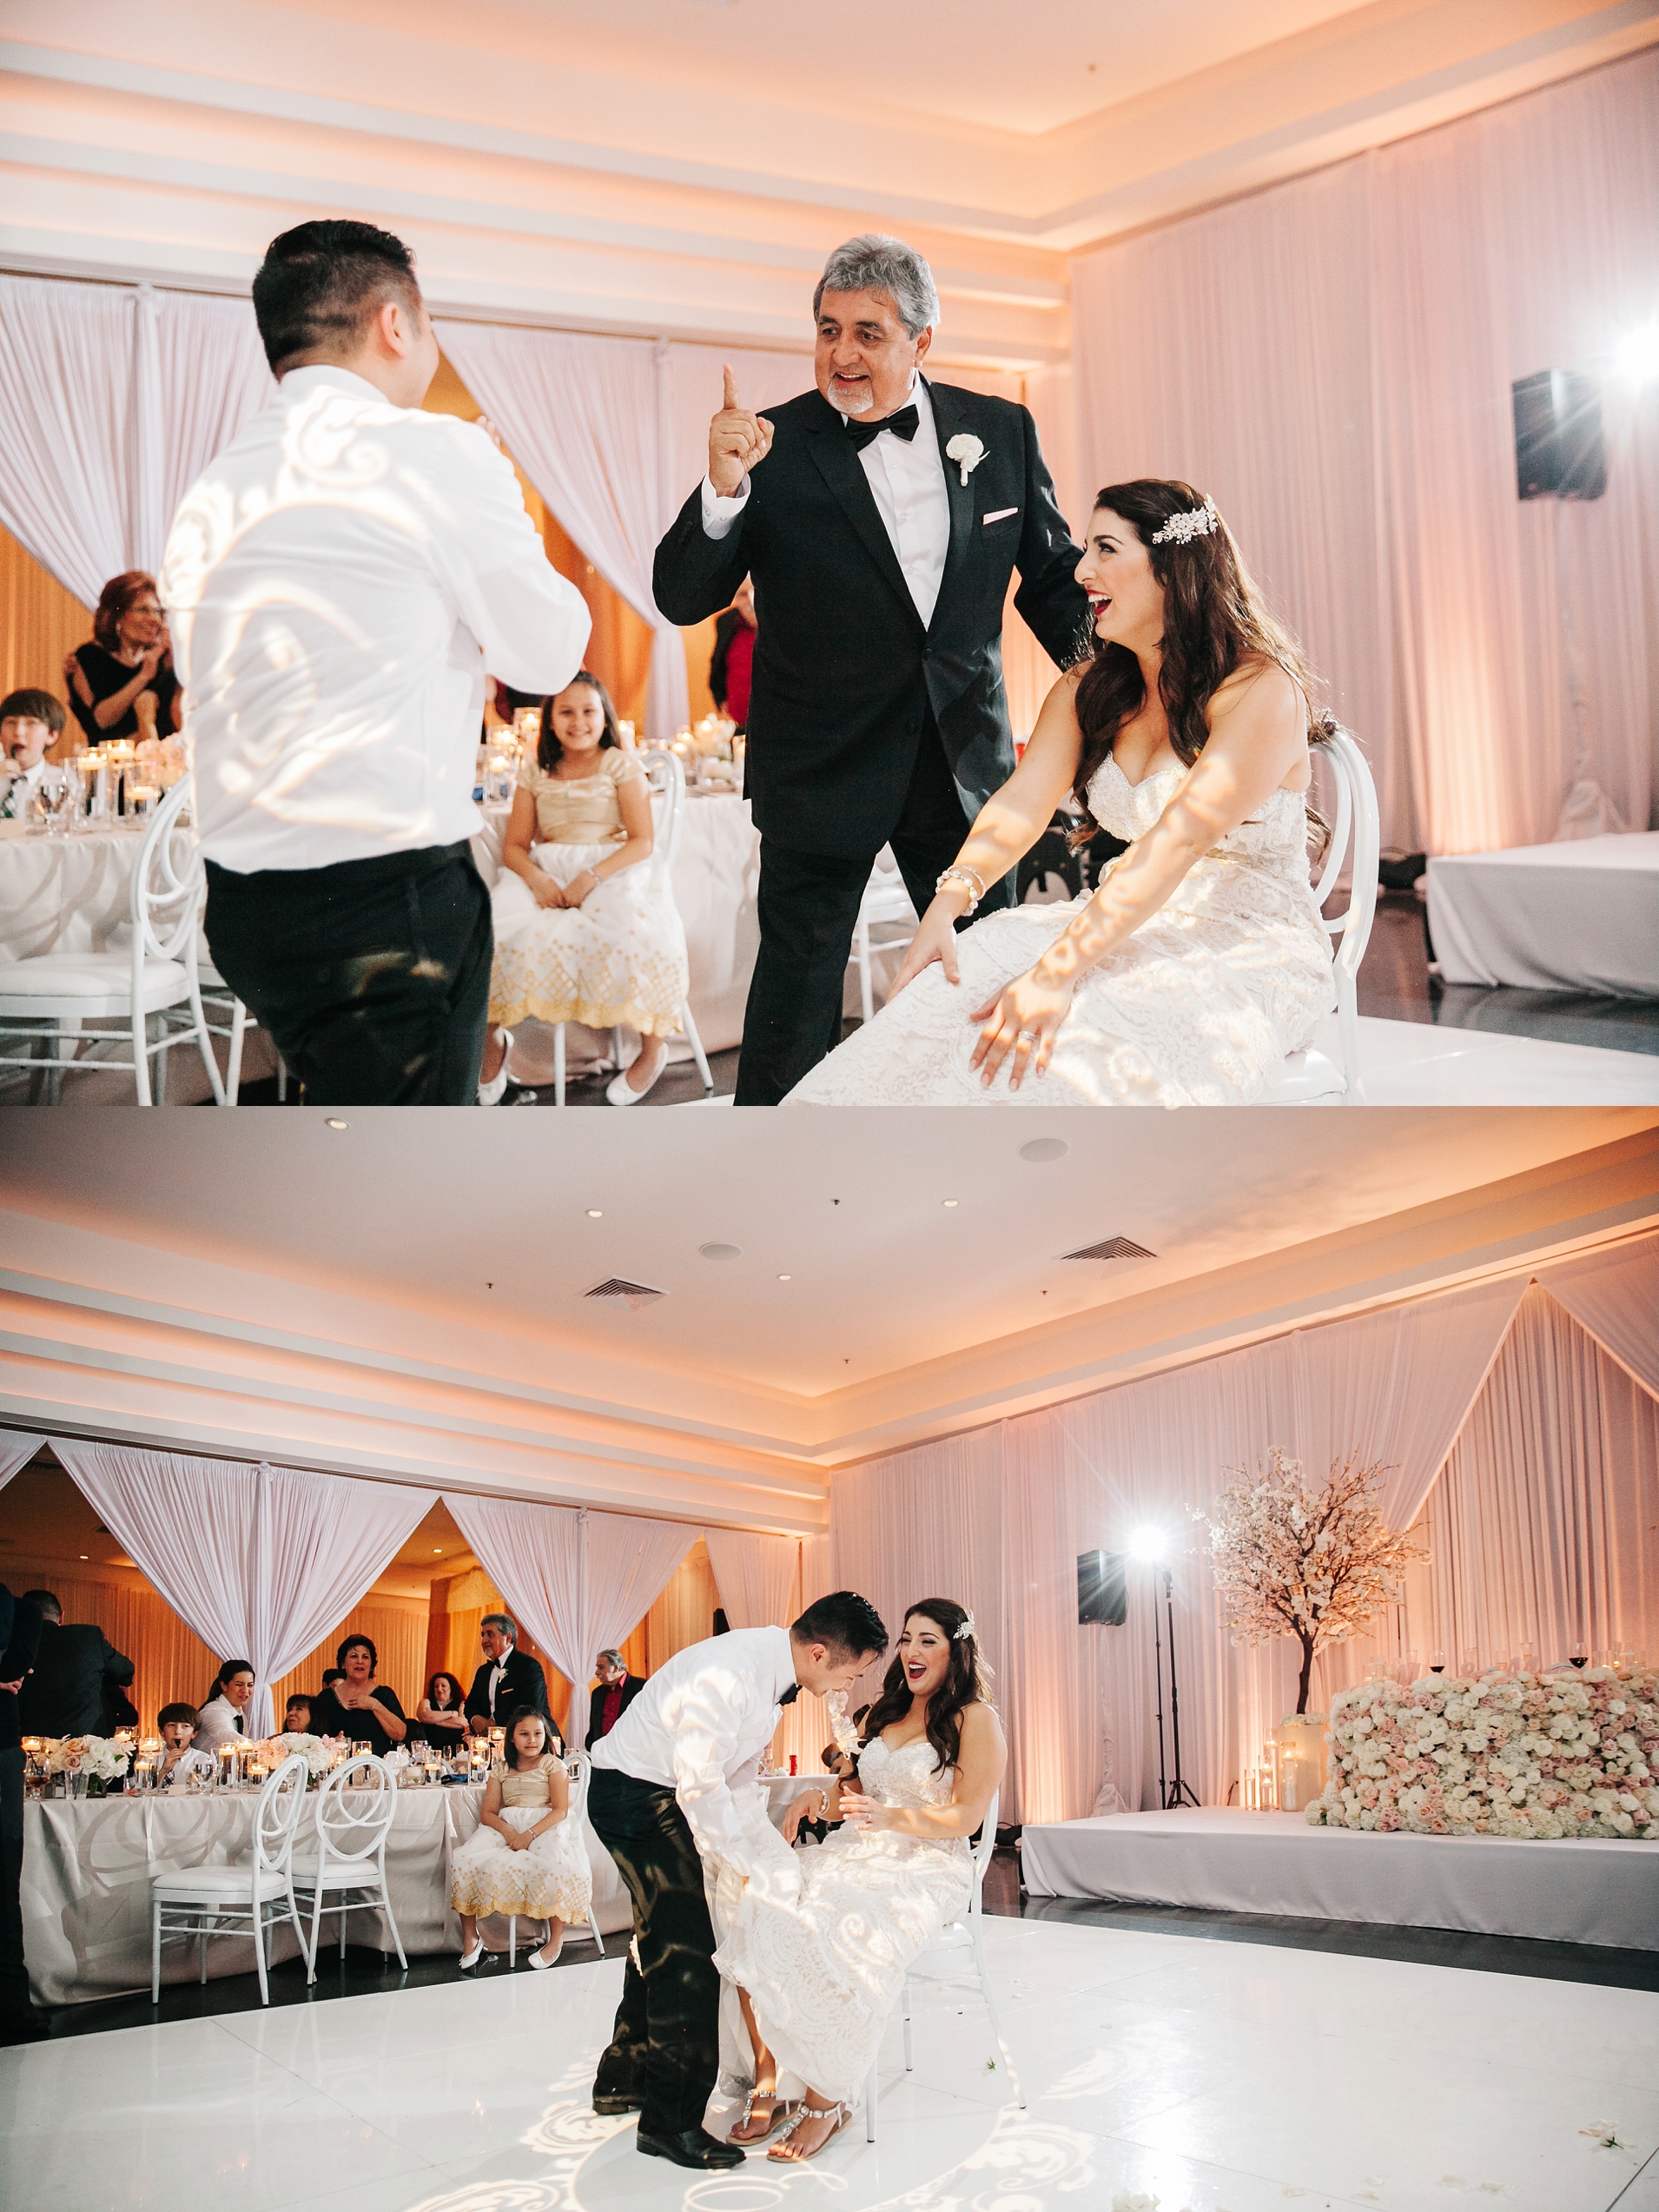 Garter Toss-Wedding Reception by Brittney Hannon Photography at Venue by Three Petals Wedding in Huntington Beach, CA 